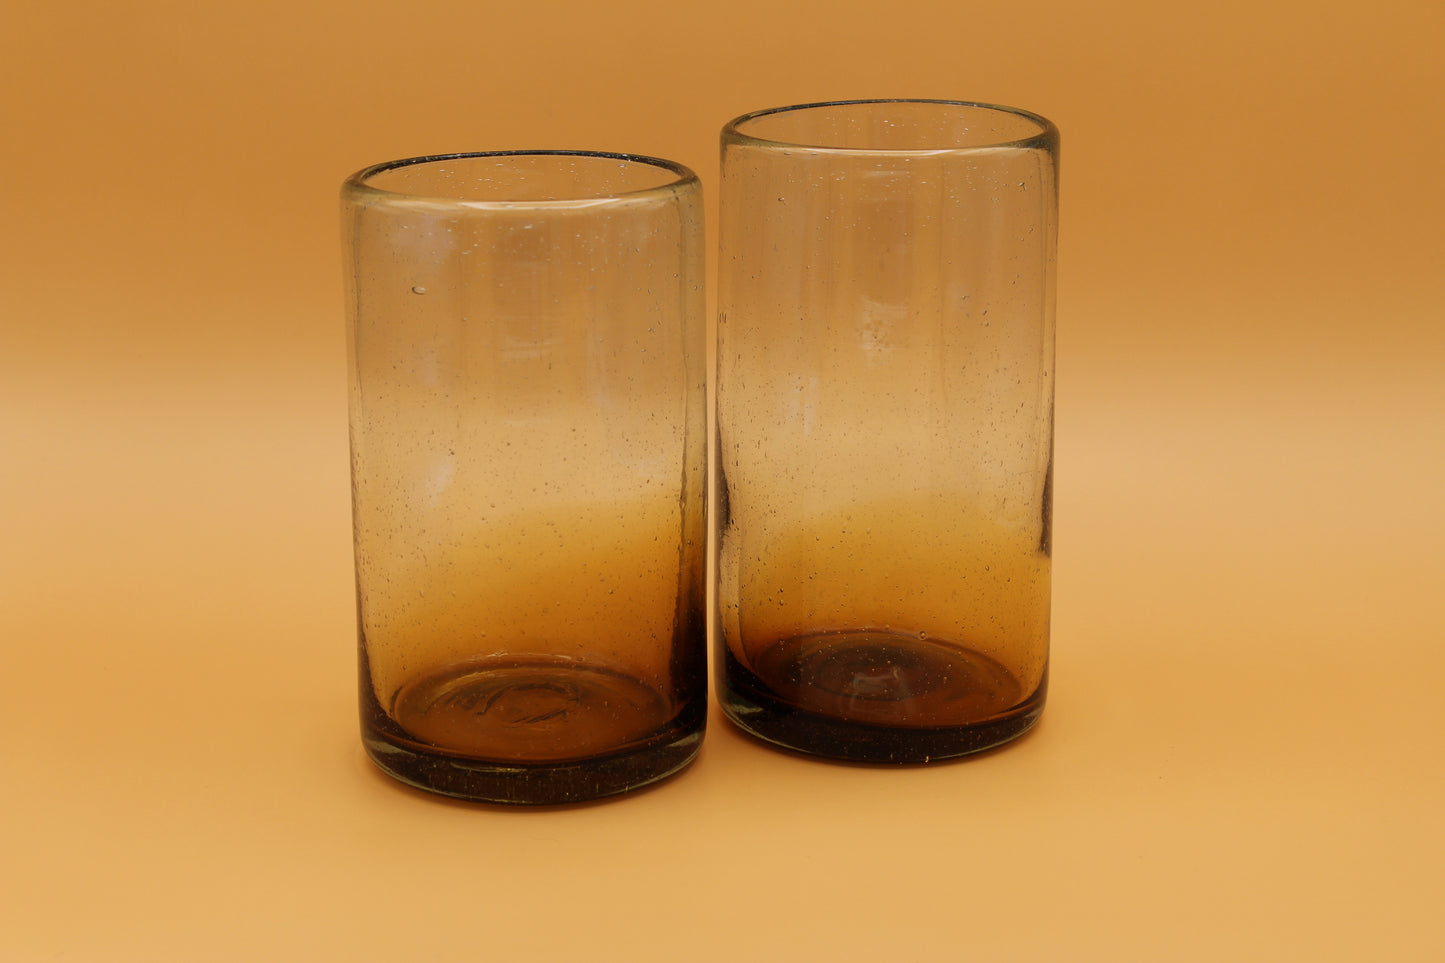 Sofia Tall Ombre Glass (Set of 2)